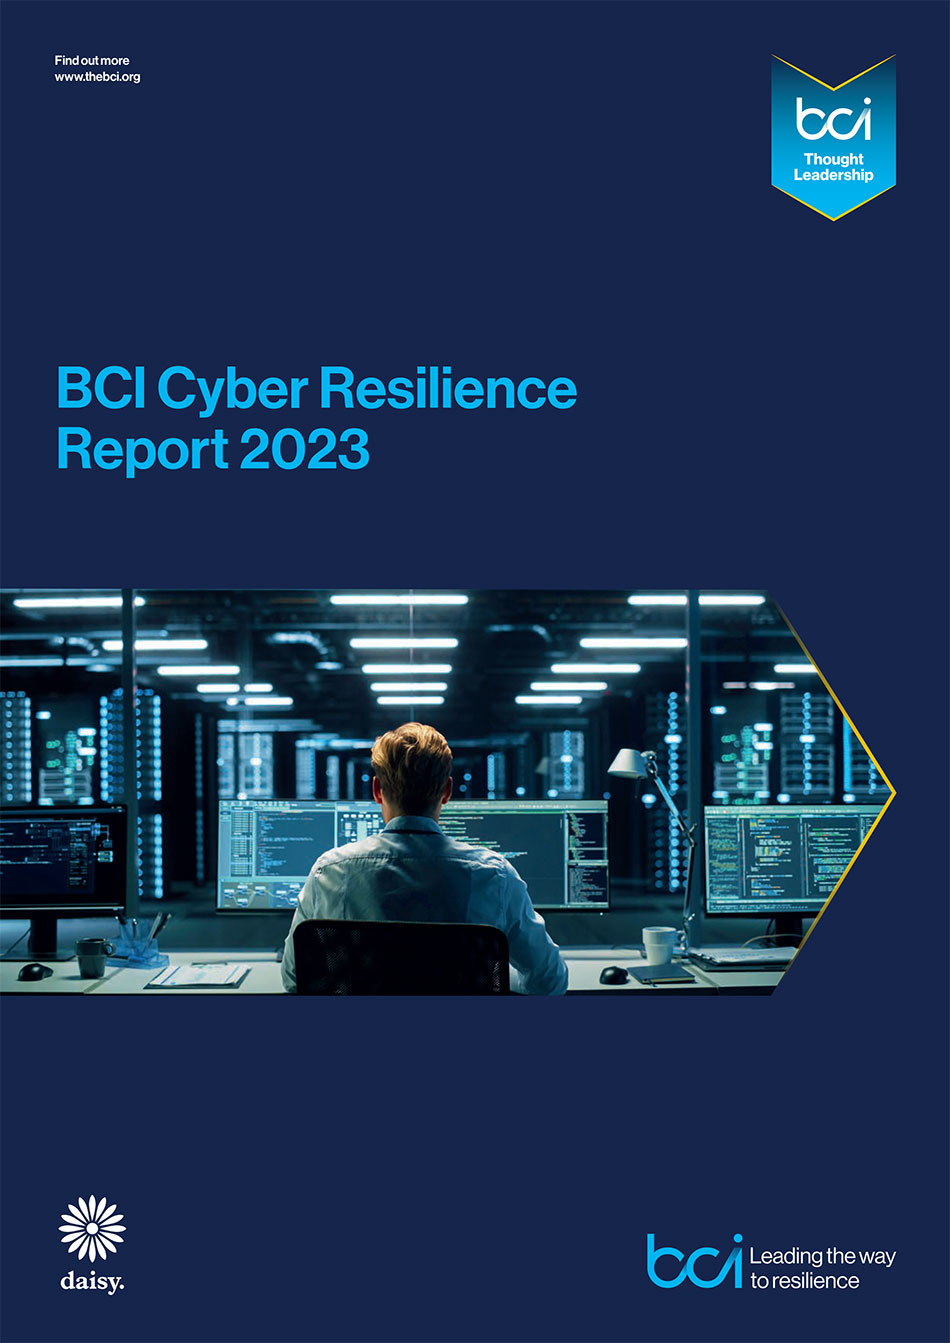 BCI report image